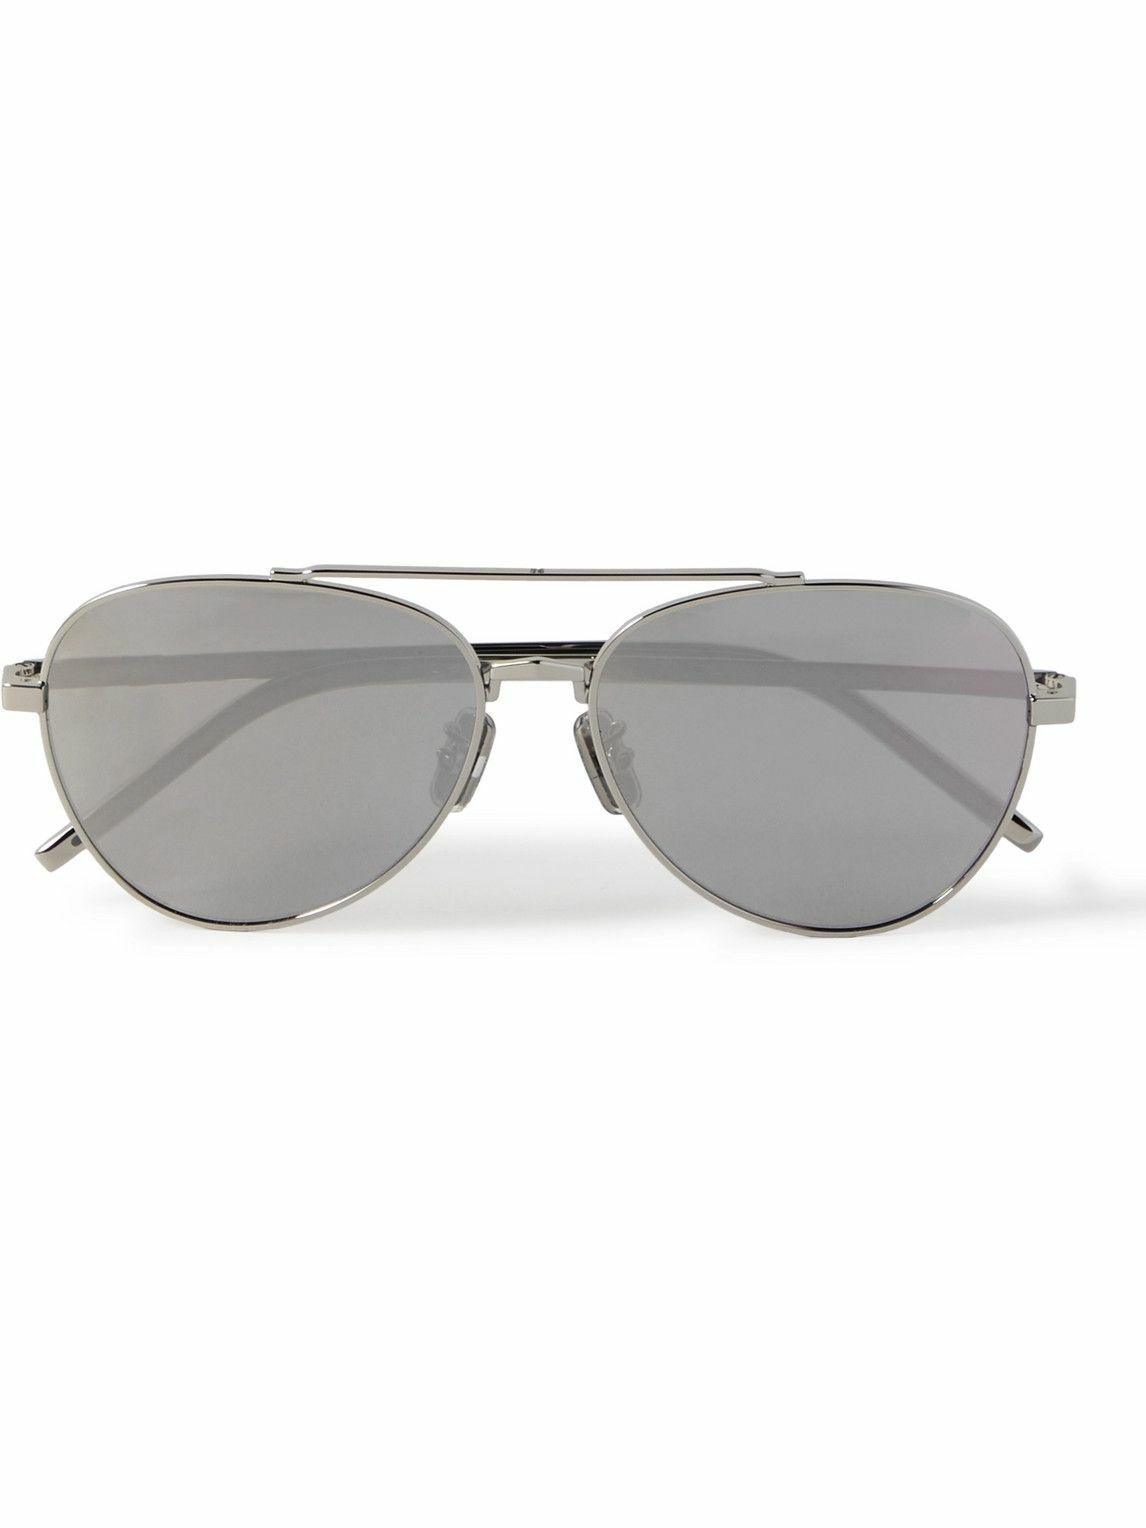 Givenchy - GV Speed Aviator-Style Silver-Tone Sunglasses Givenchy